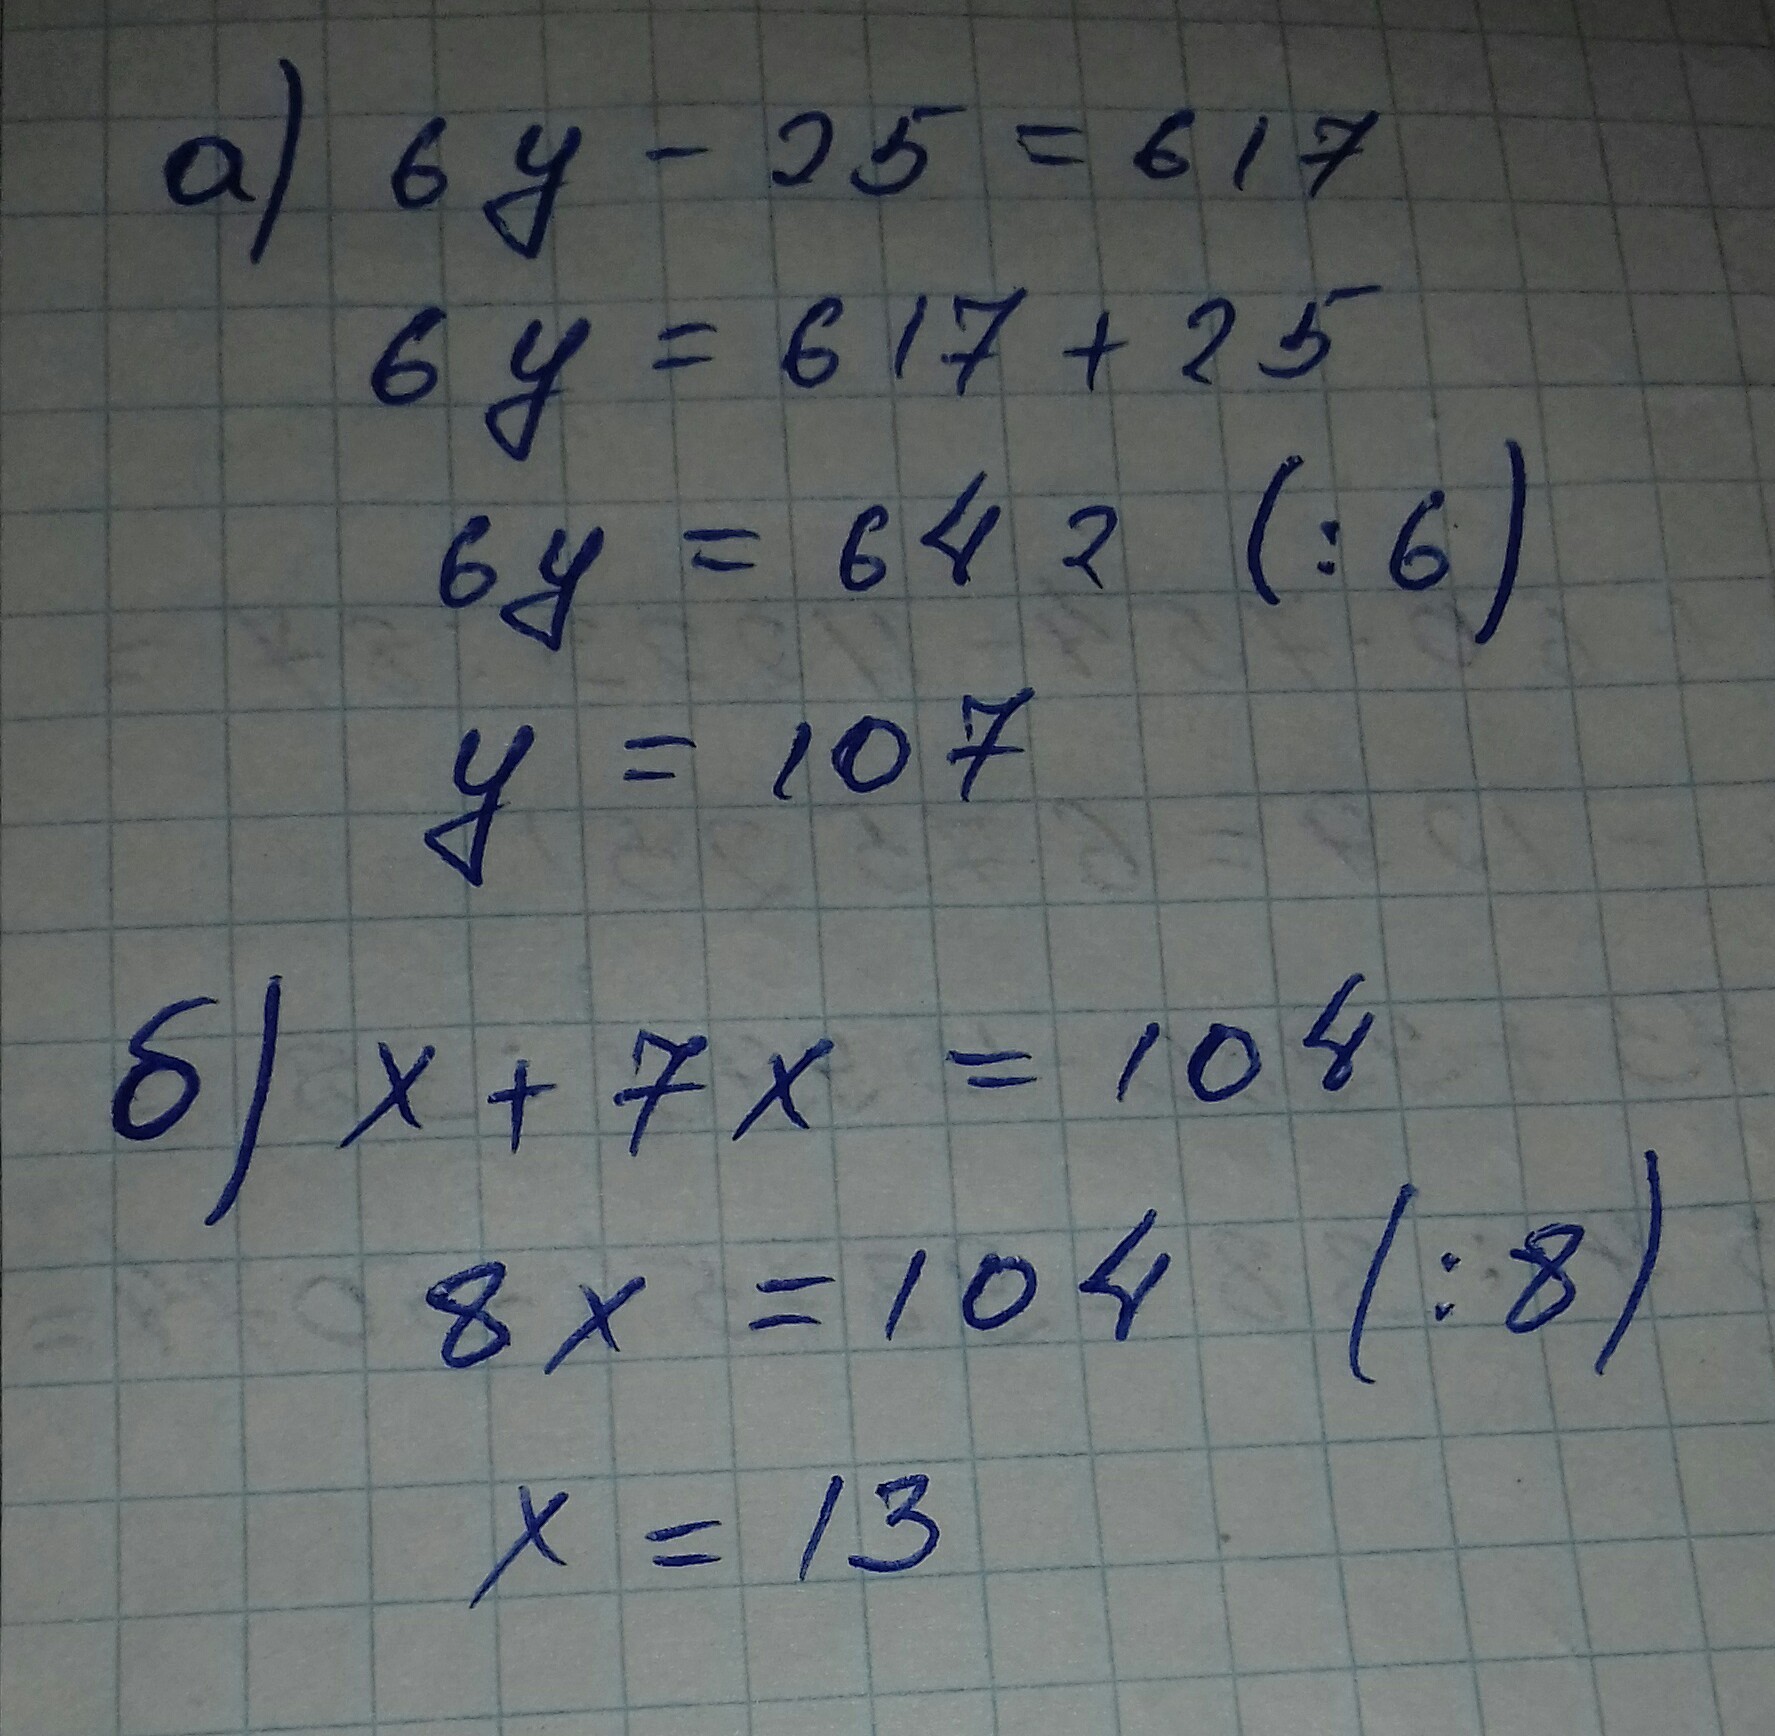 6 y 18. Решите уравнение 6у-25=617. 6у-25=617. 6y 25 617 уравнение. X+7x=104.